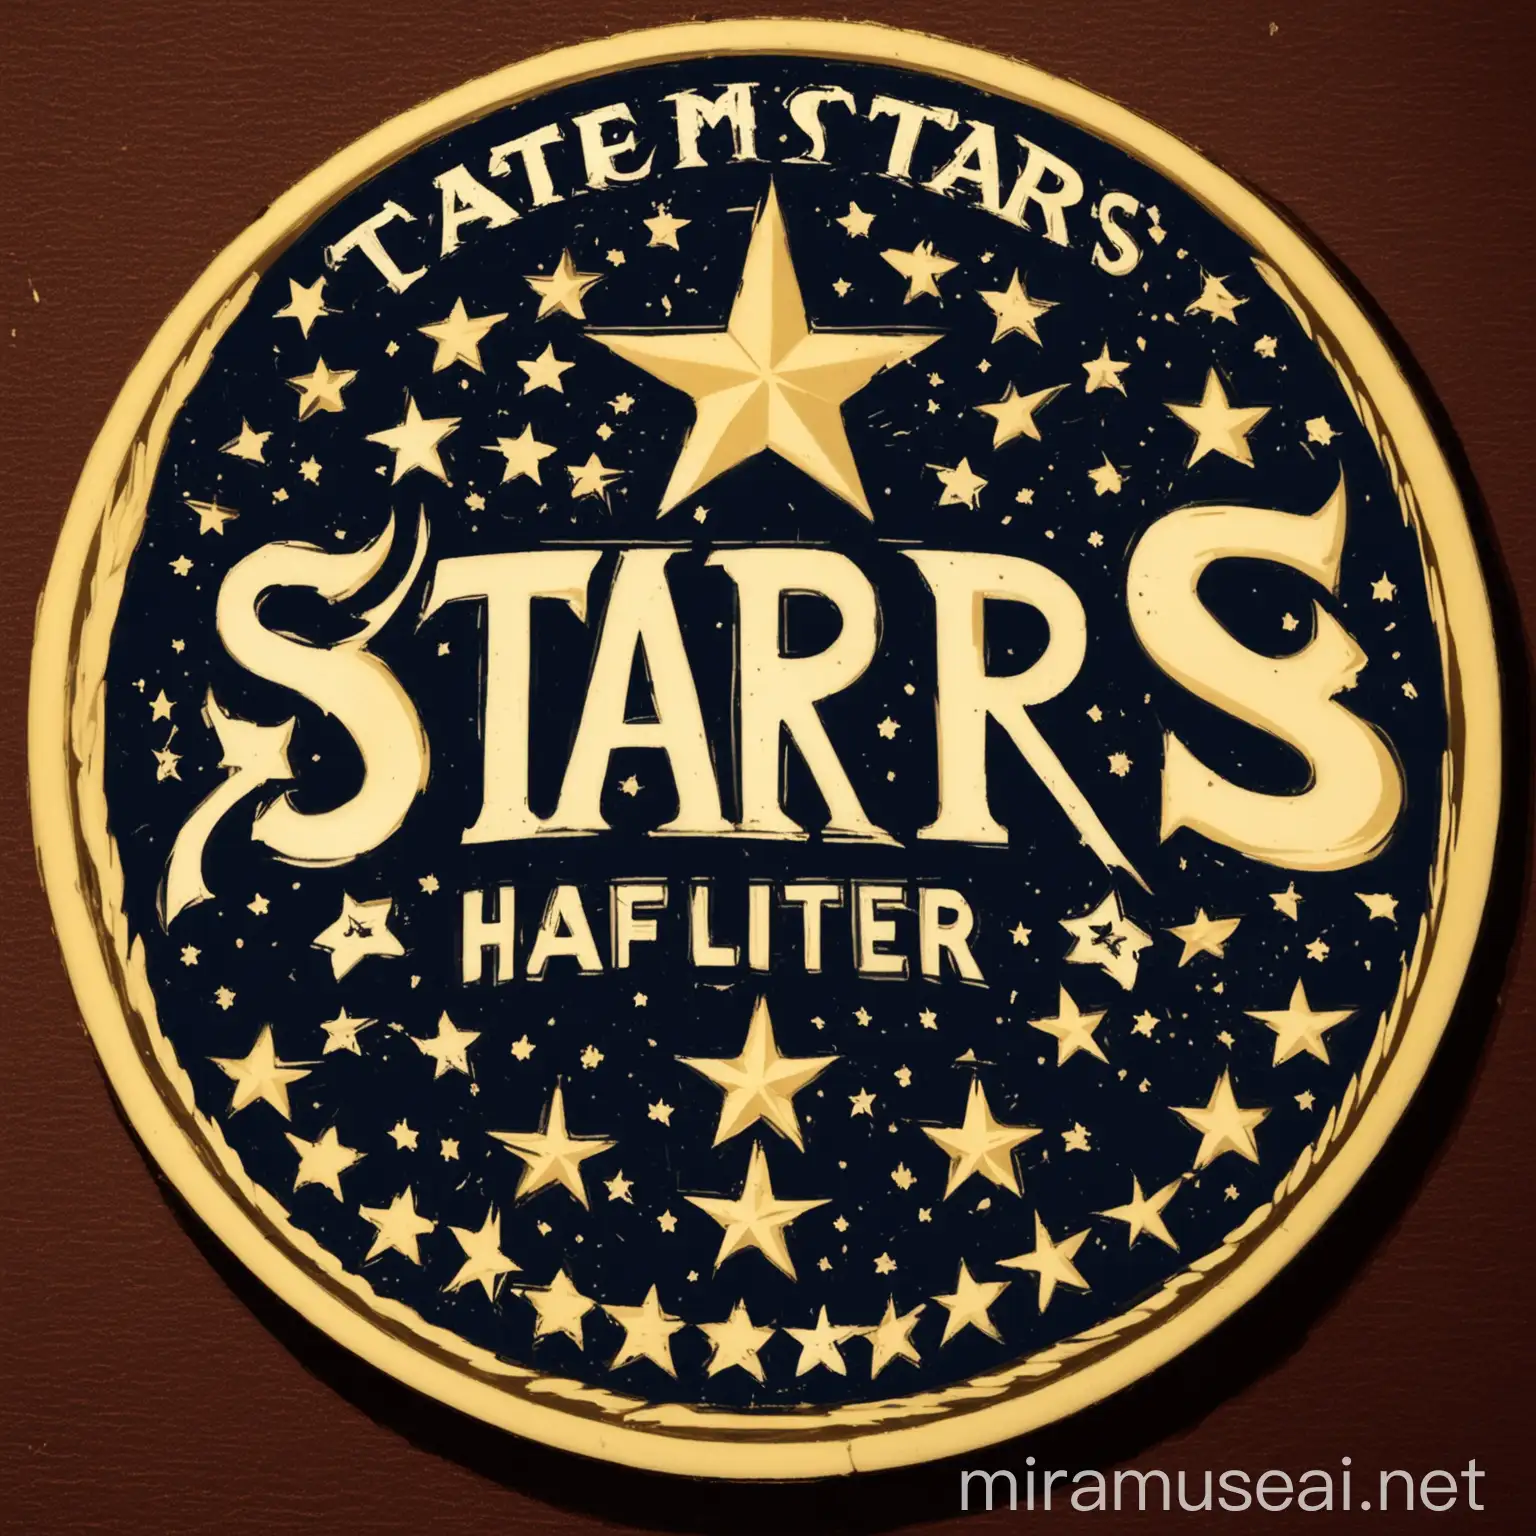 Celestial Emblem Stars on Half Liter